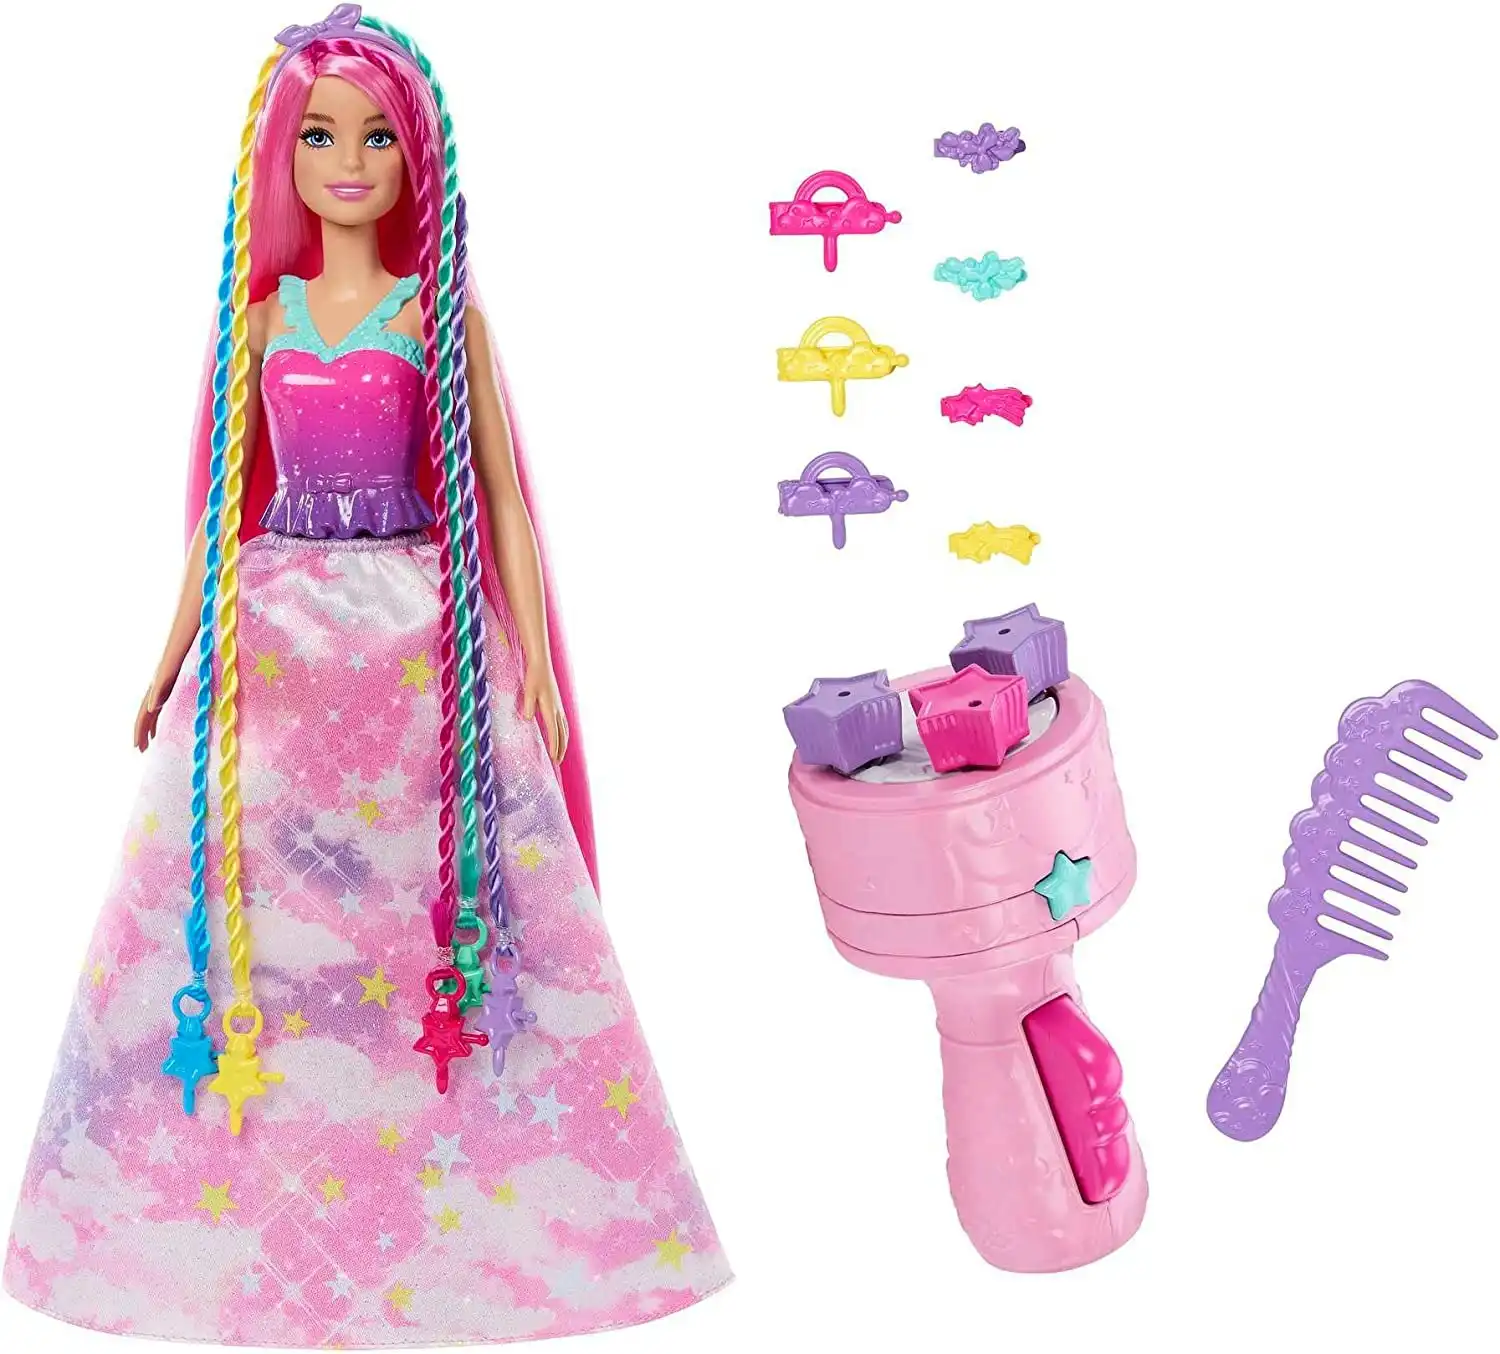 Barbie Doll Fantasy Hair with Braid and Twist Styling